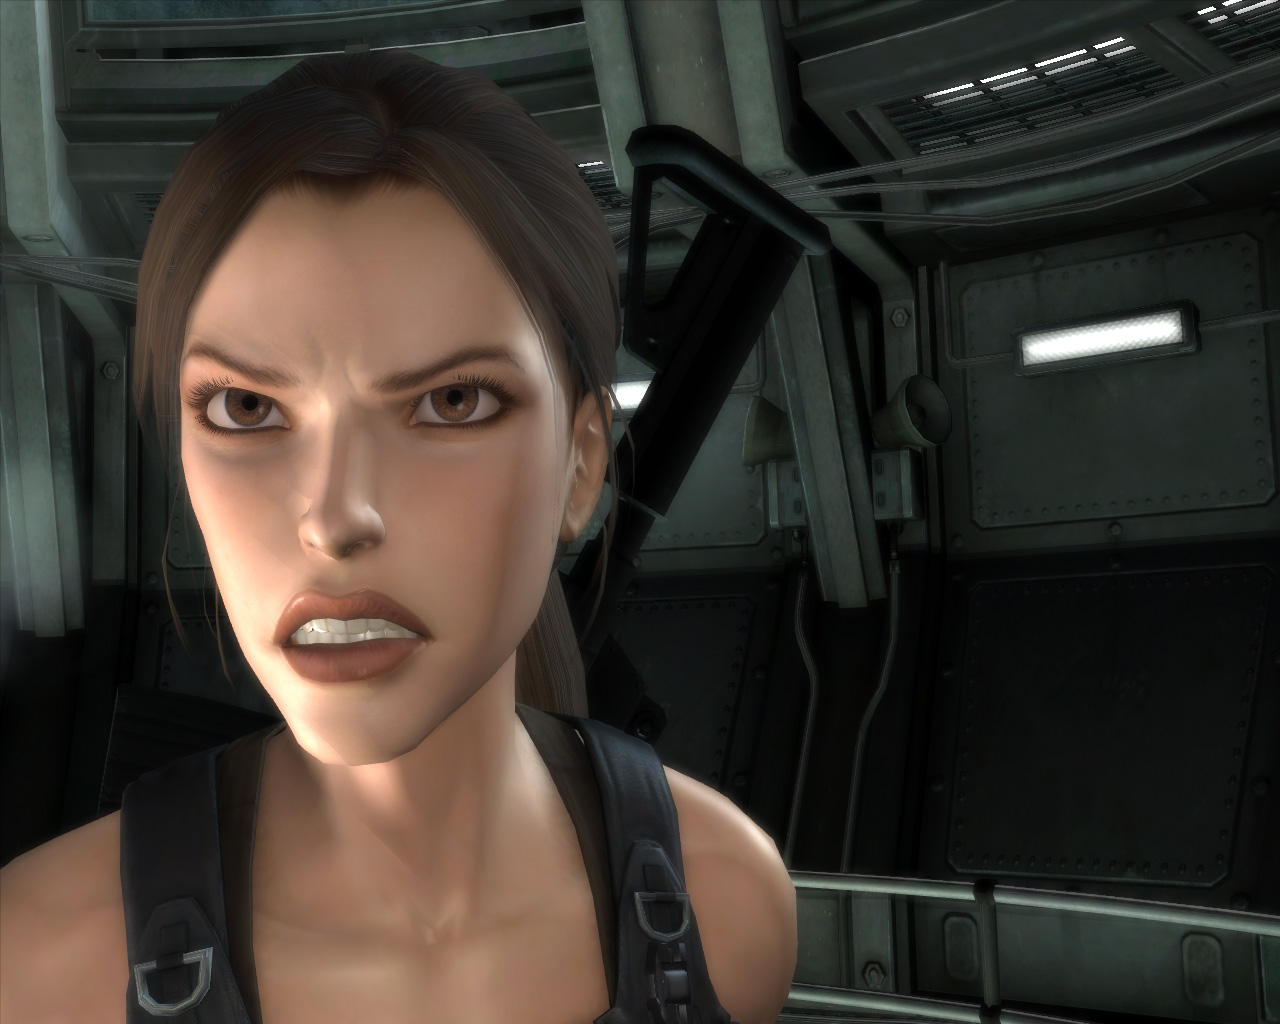 19. Tomb Raider 8. 9. 8. 7. 6. 5. 4. 3. 2. 1. Lara. 